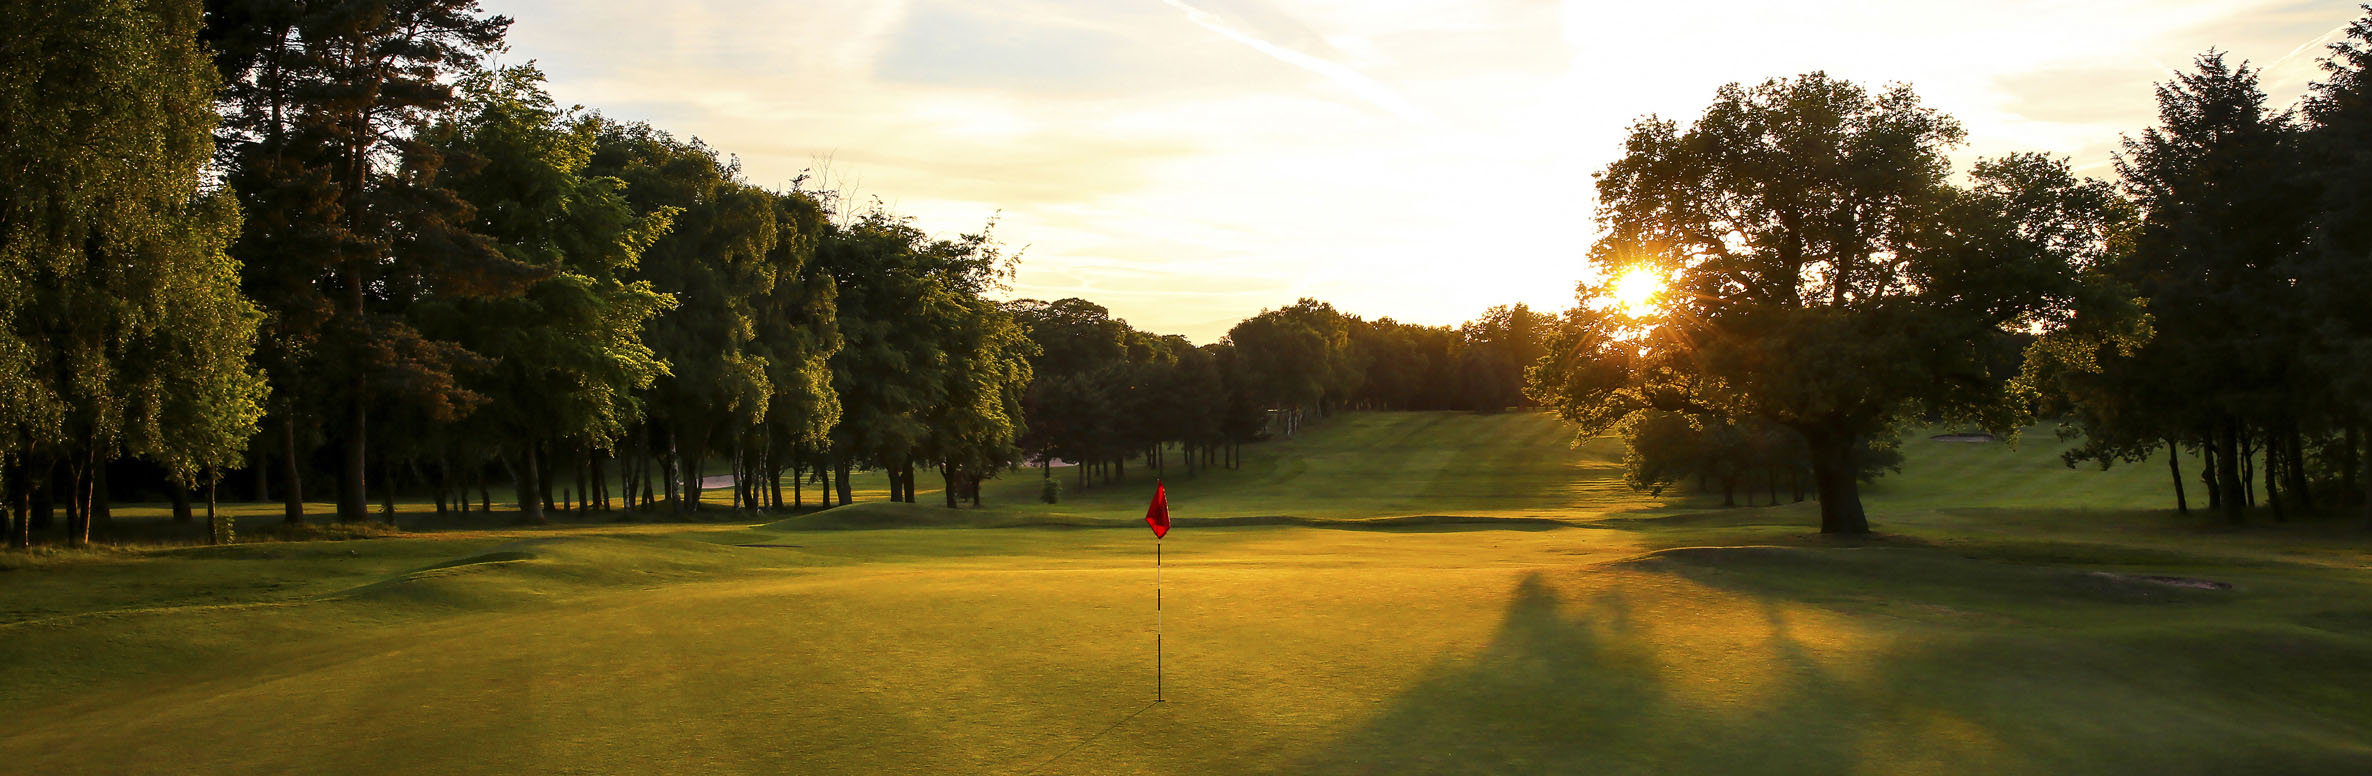 Golf Course Image - Little Aston Golf Club No. 16